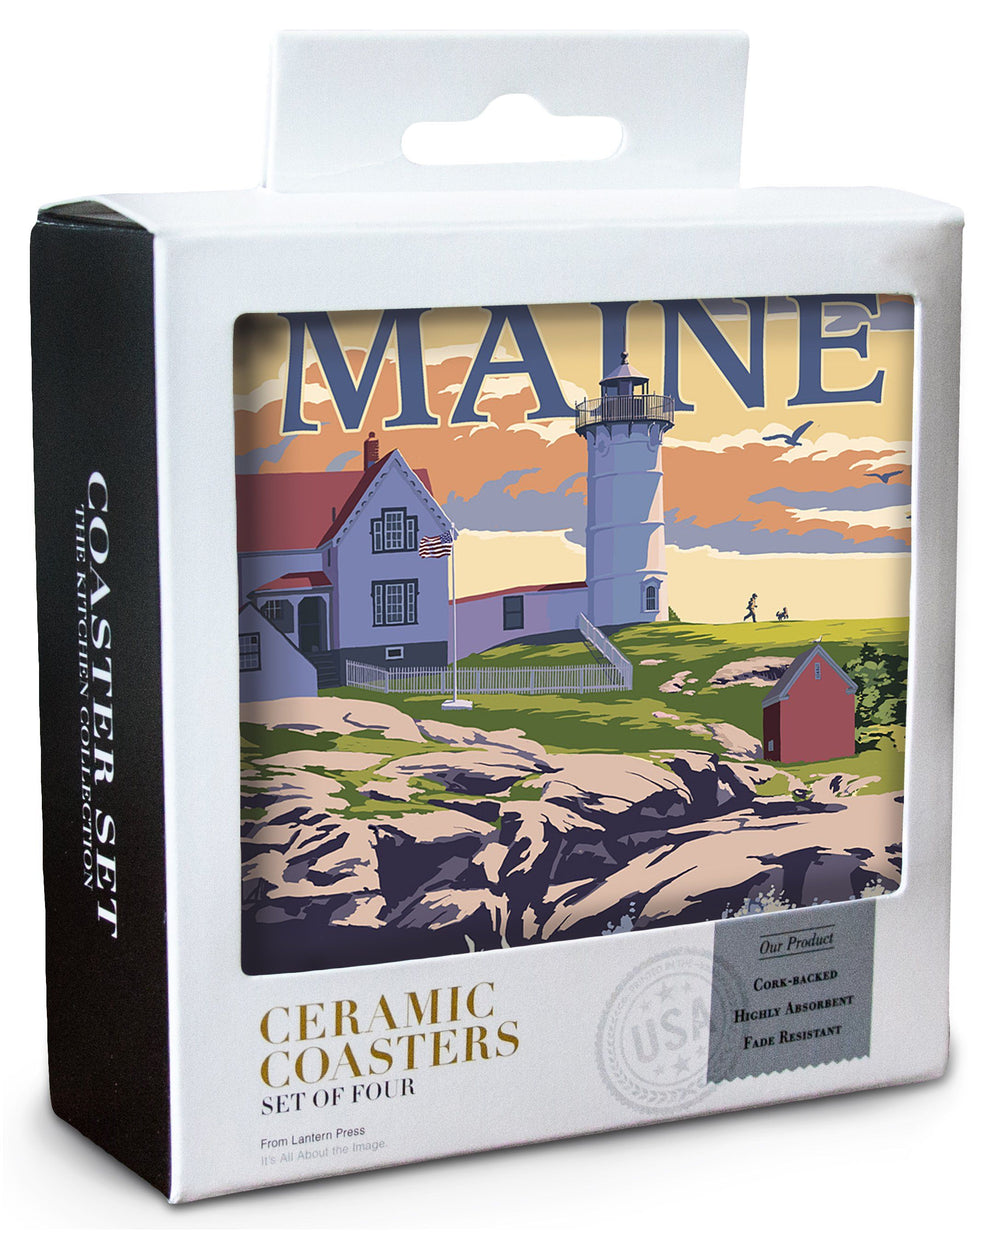 York, Maine, Nubble Lighthouse, Lantern Press Artwork, Coaster Set Coasters Nightingale Boutique 